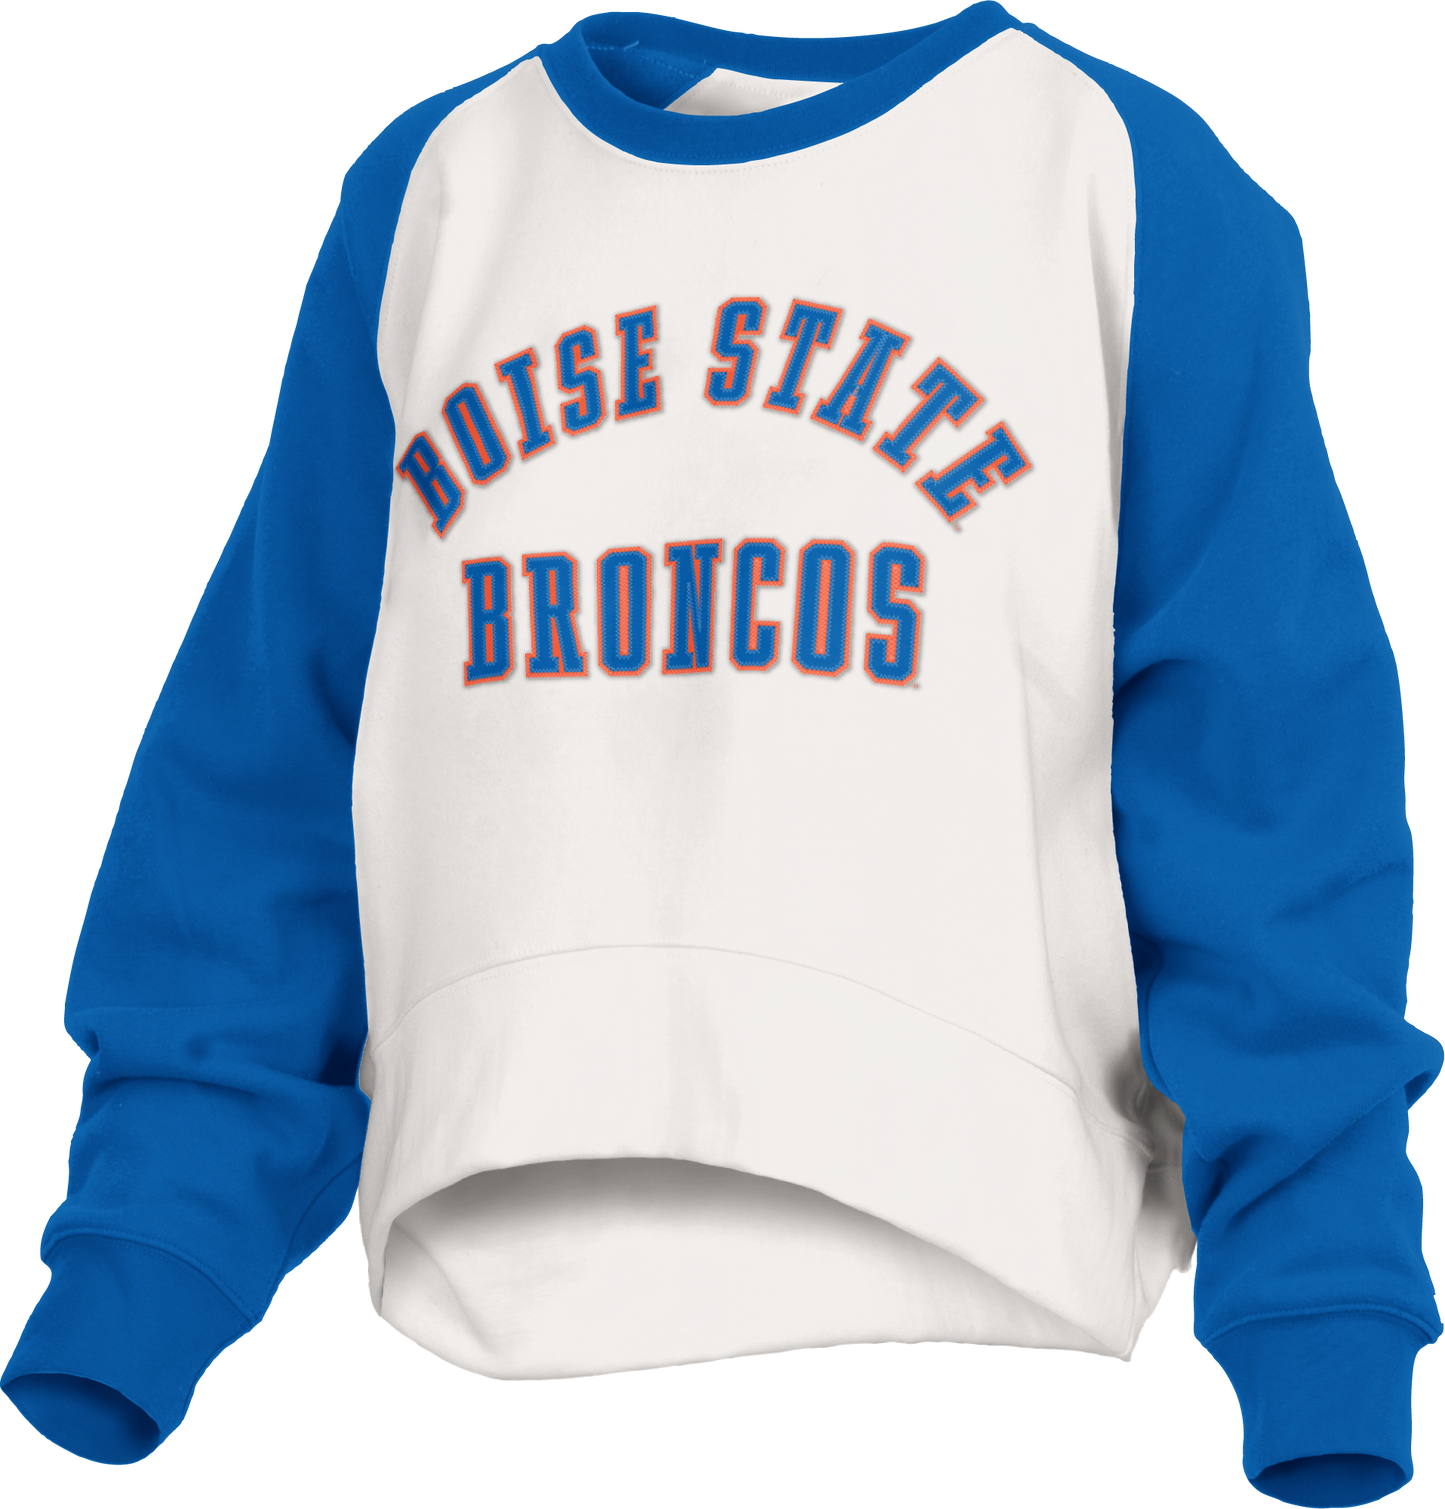 Boise State Broncos Pressbox Women's Crewneck Sweatshirt (White/Blue)